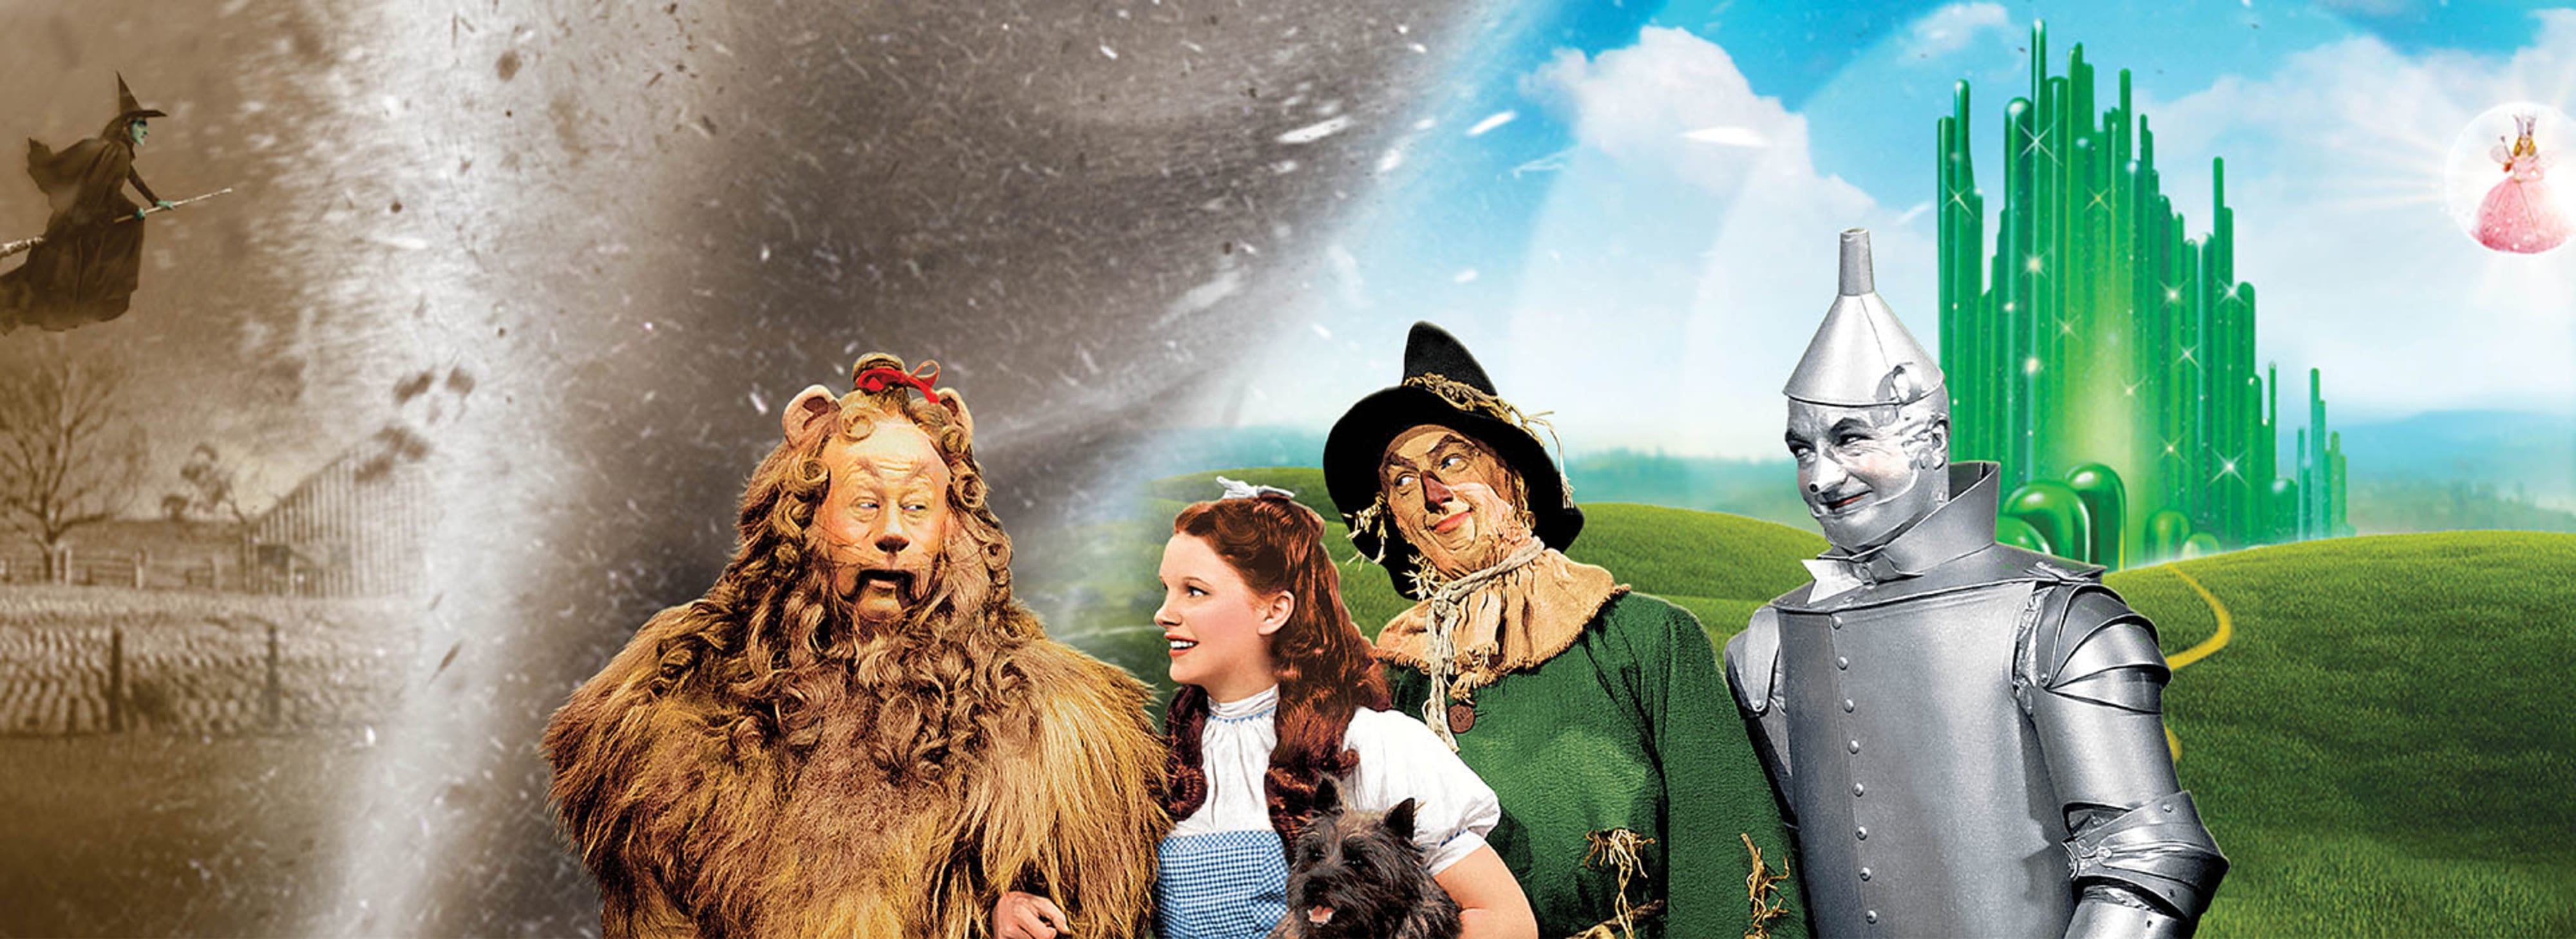 The Wizard of Oz 85th Anniversary Fathom Events